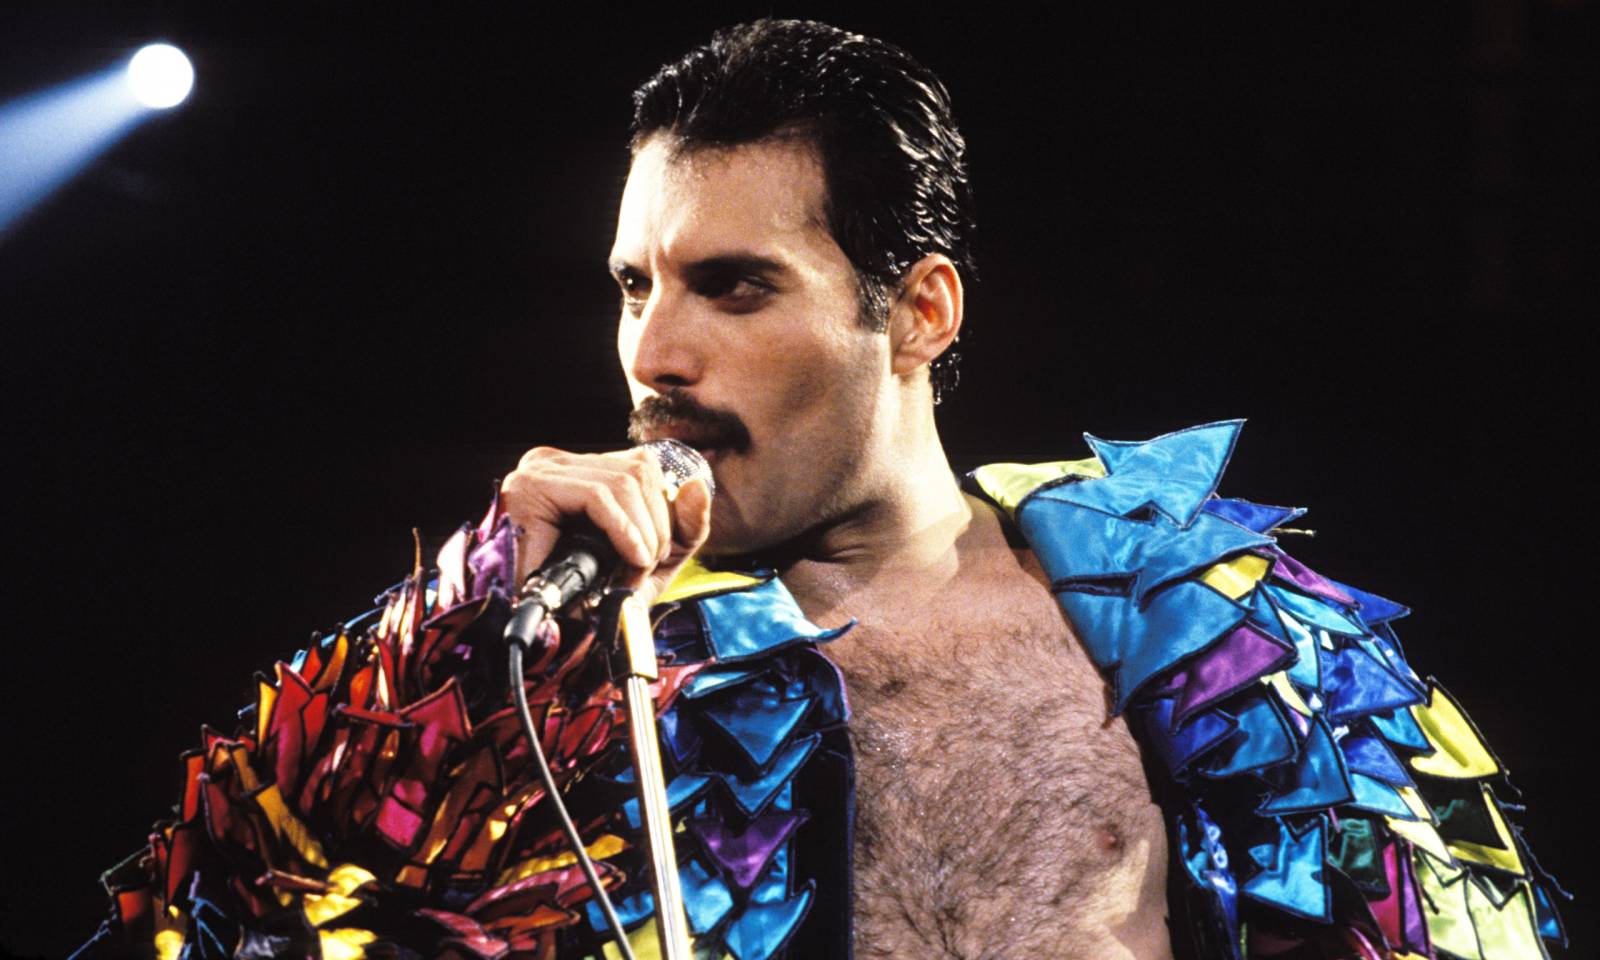 VIDEO: Takhle zní Bohemian Rhapsody od Queen na 100 let starých varhanech v zábavním parku